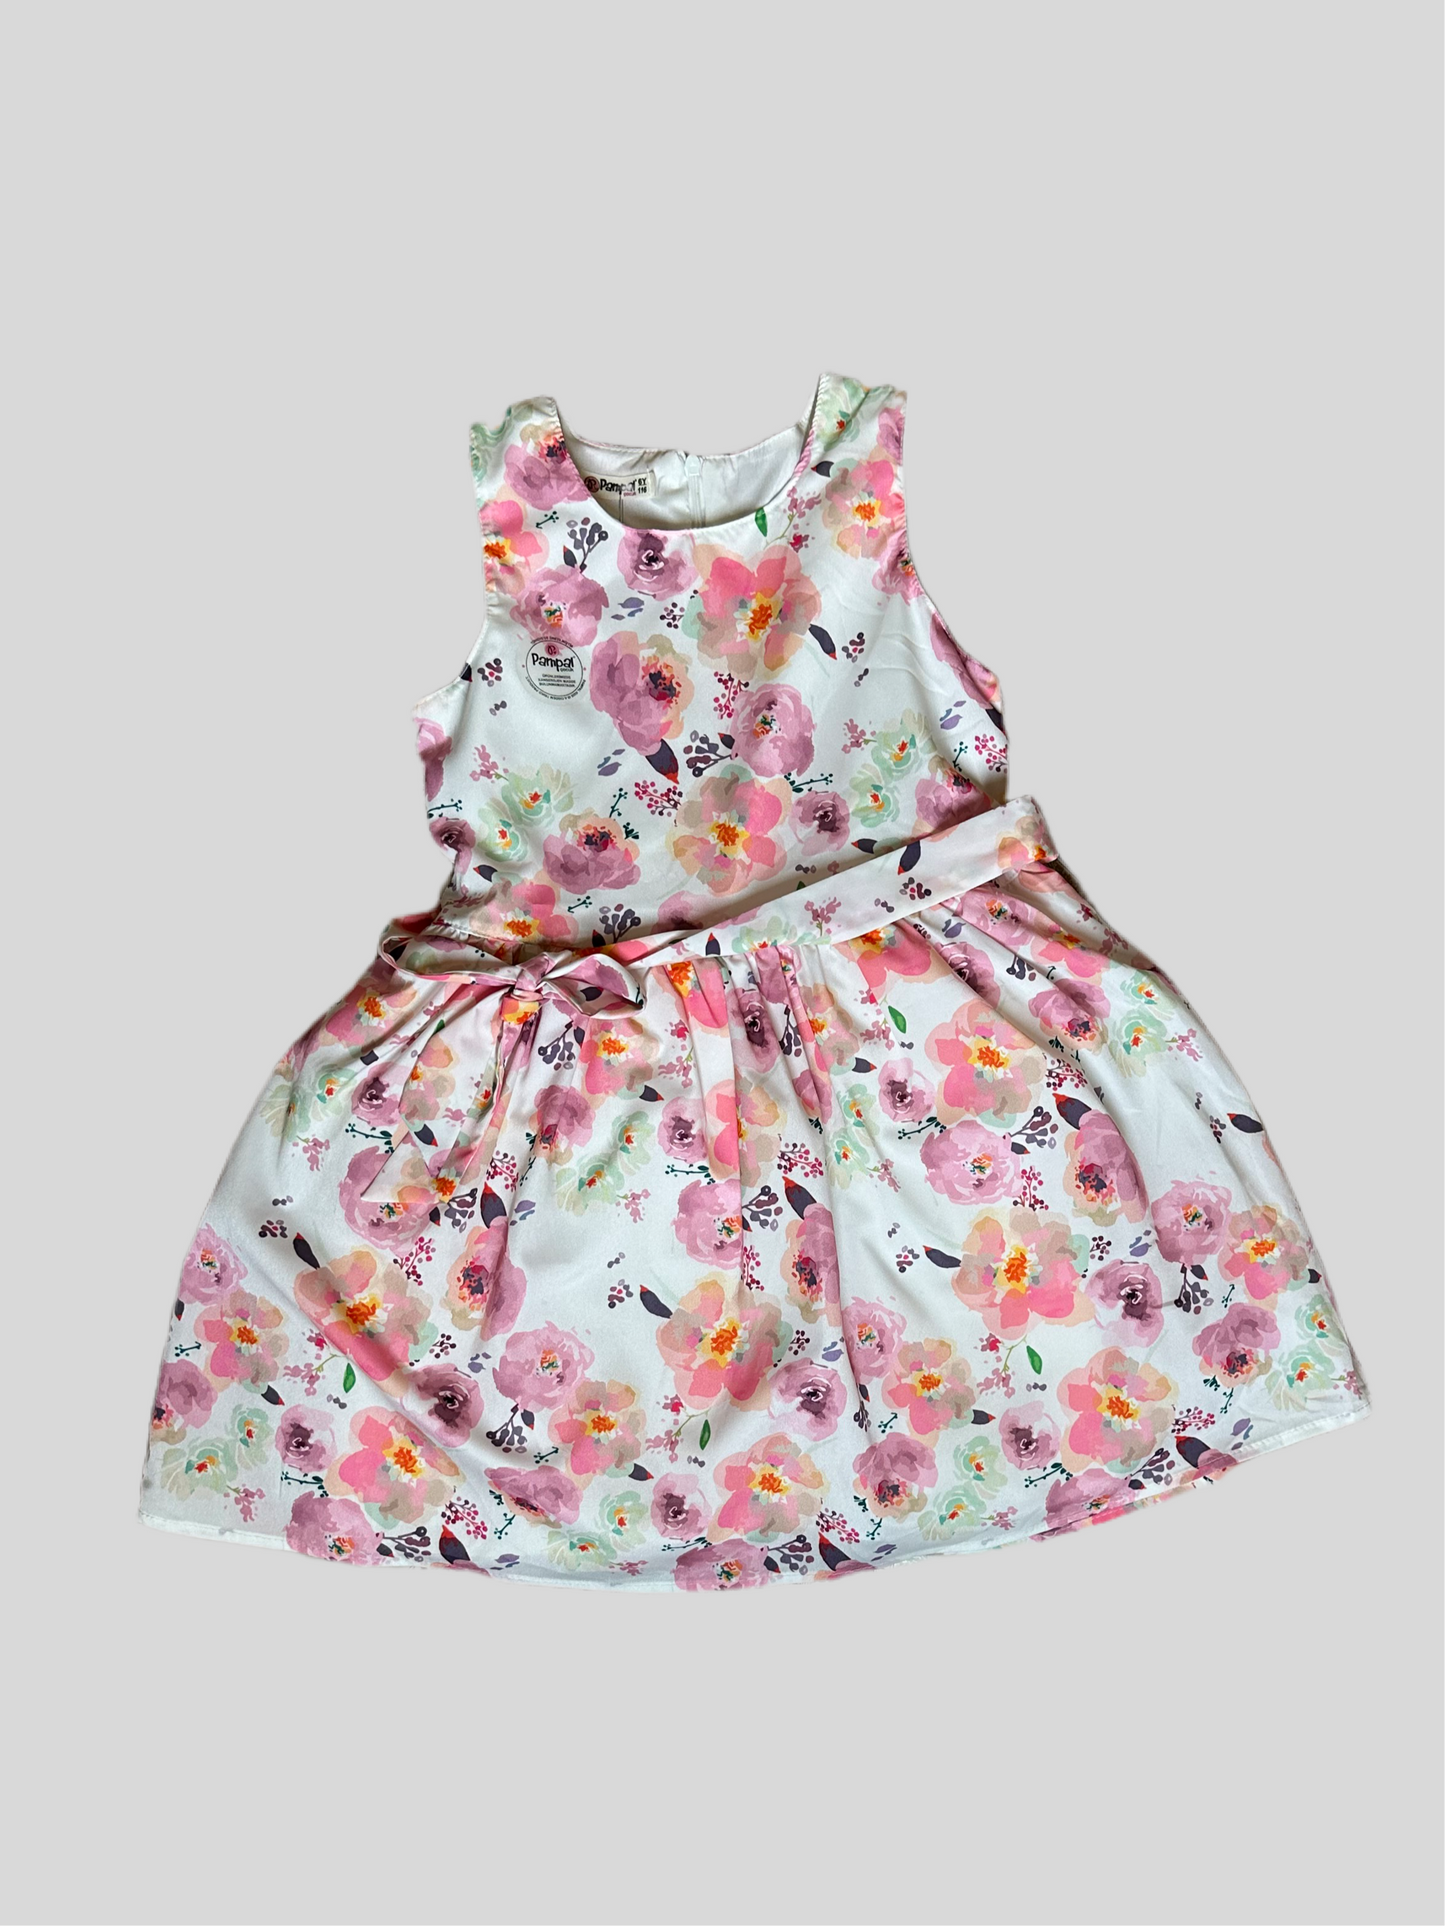 Children's dress with elegant floral print